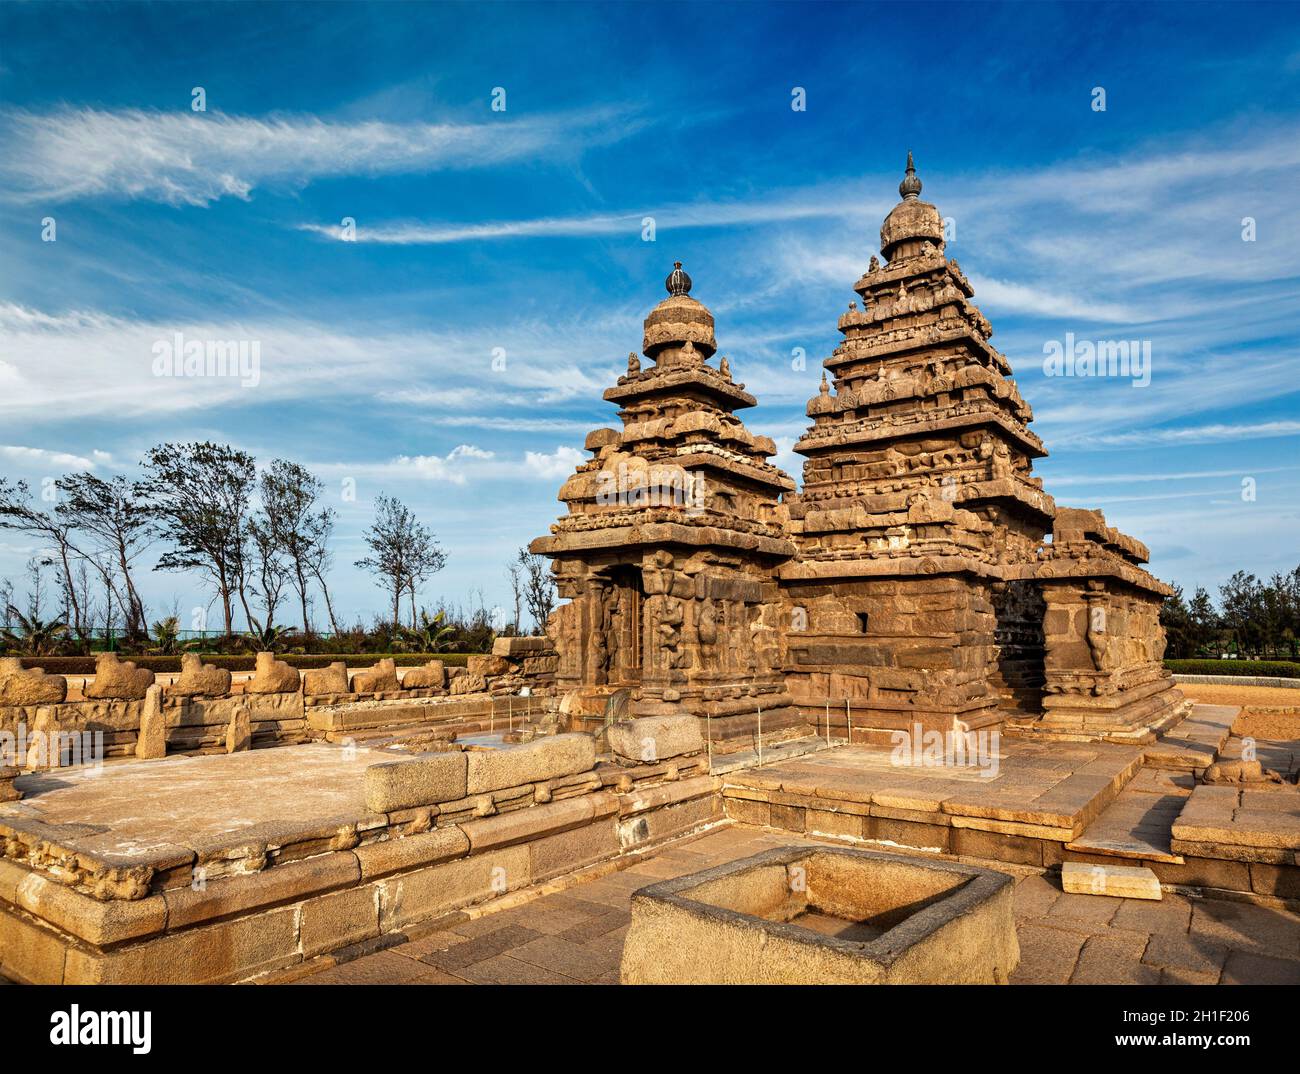 Famous Tamil Nadu landmark - Shore temple, world heritage site in  Mahabalipuram, Tamil Nadu, India Stock Photo - Alamy